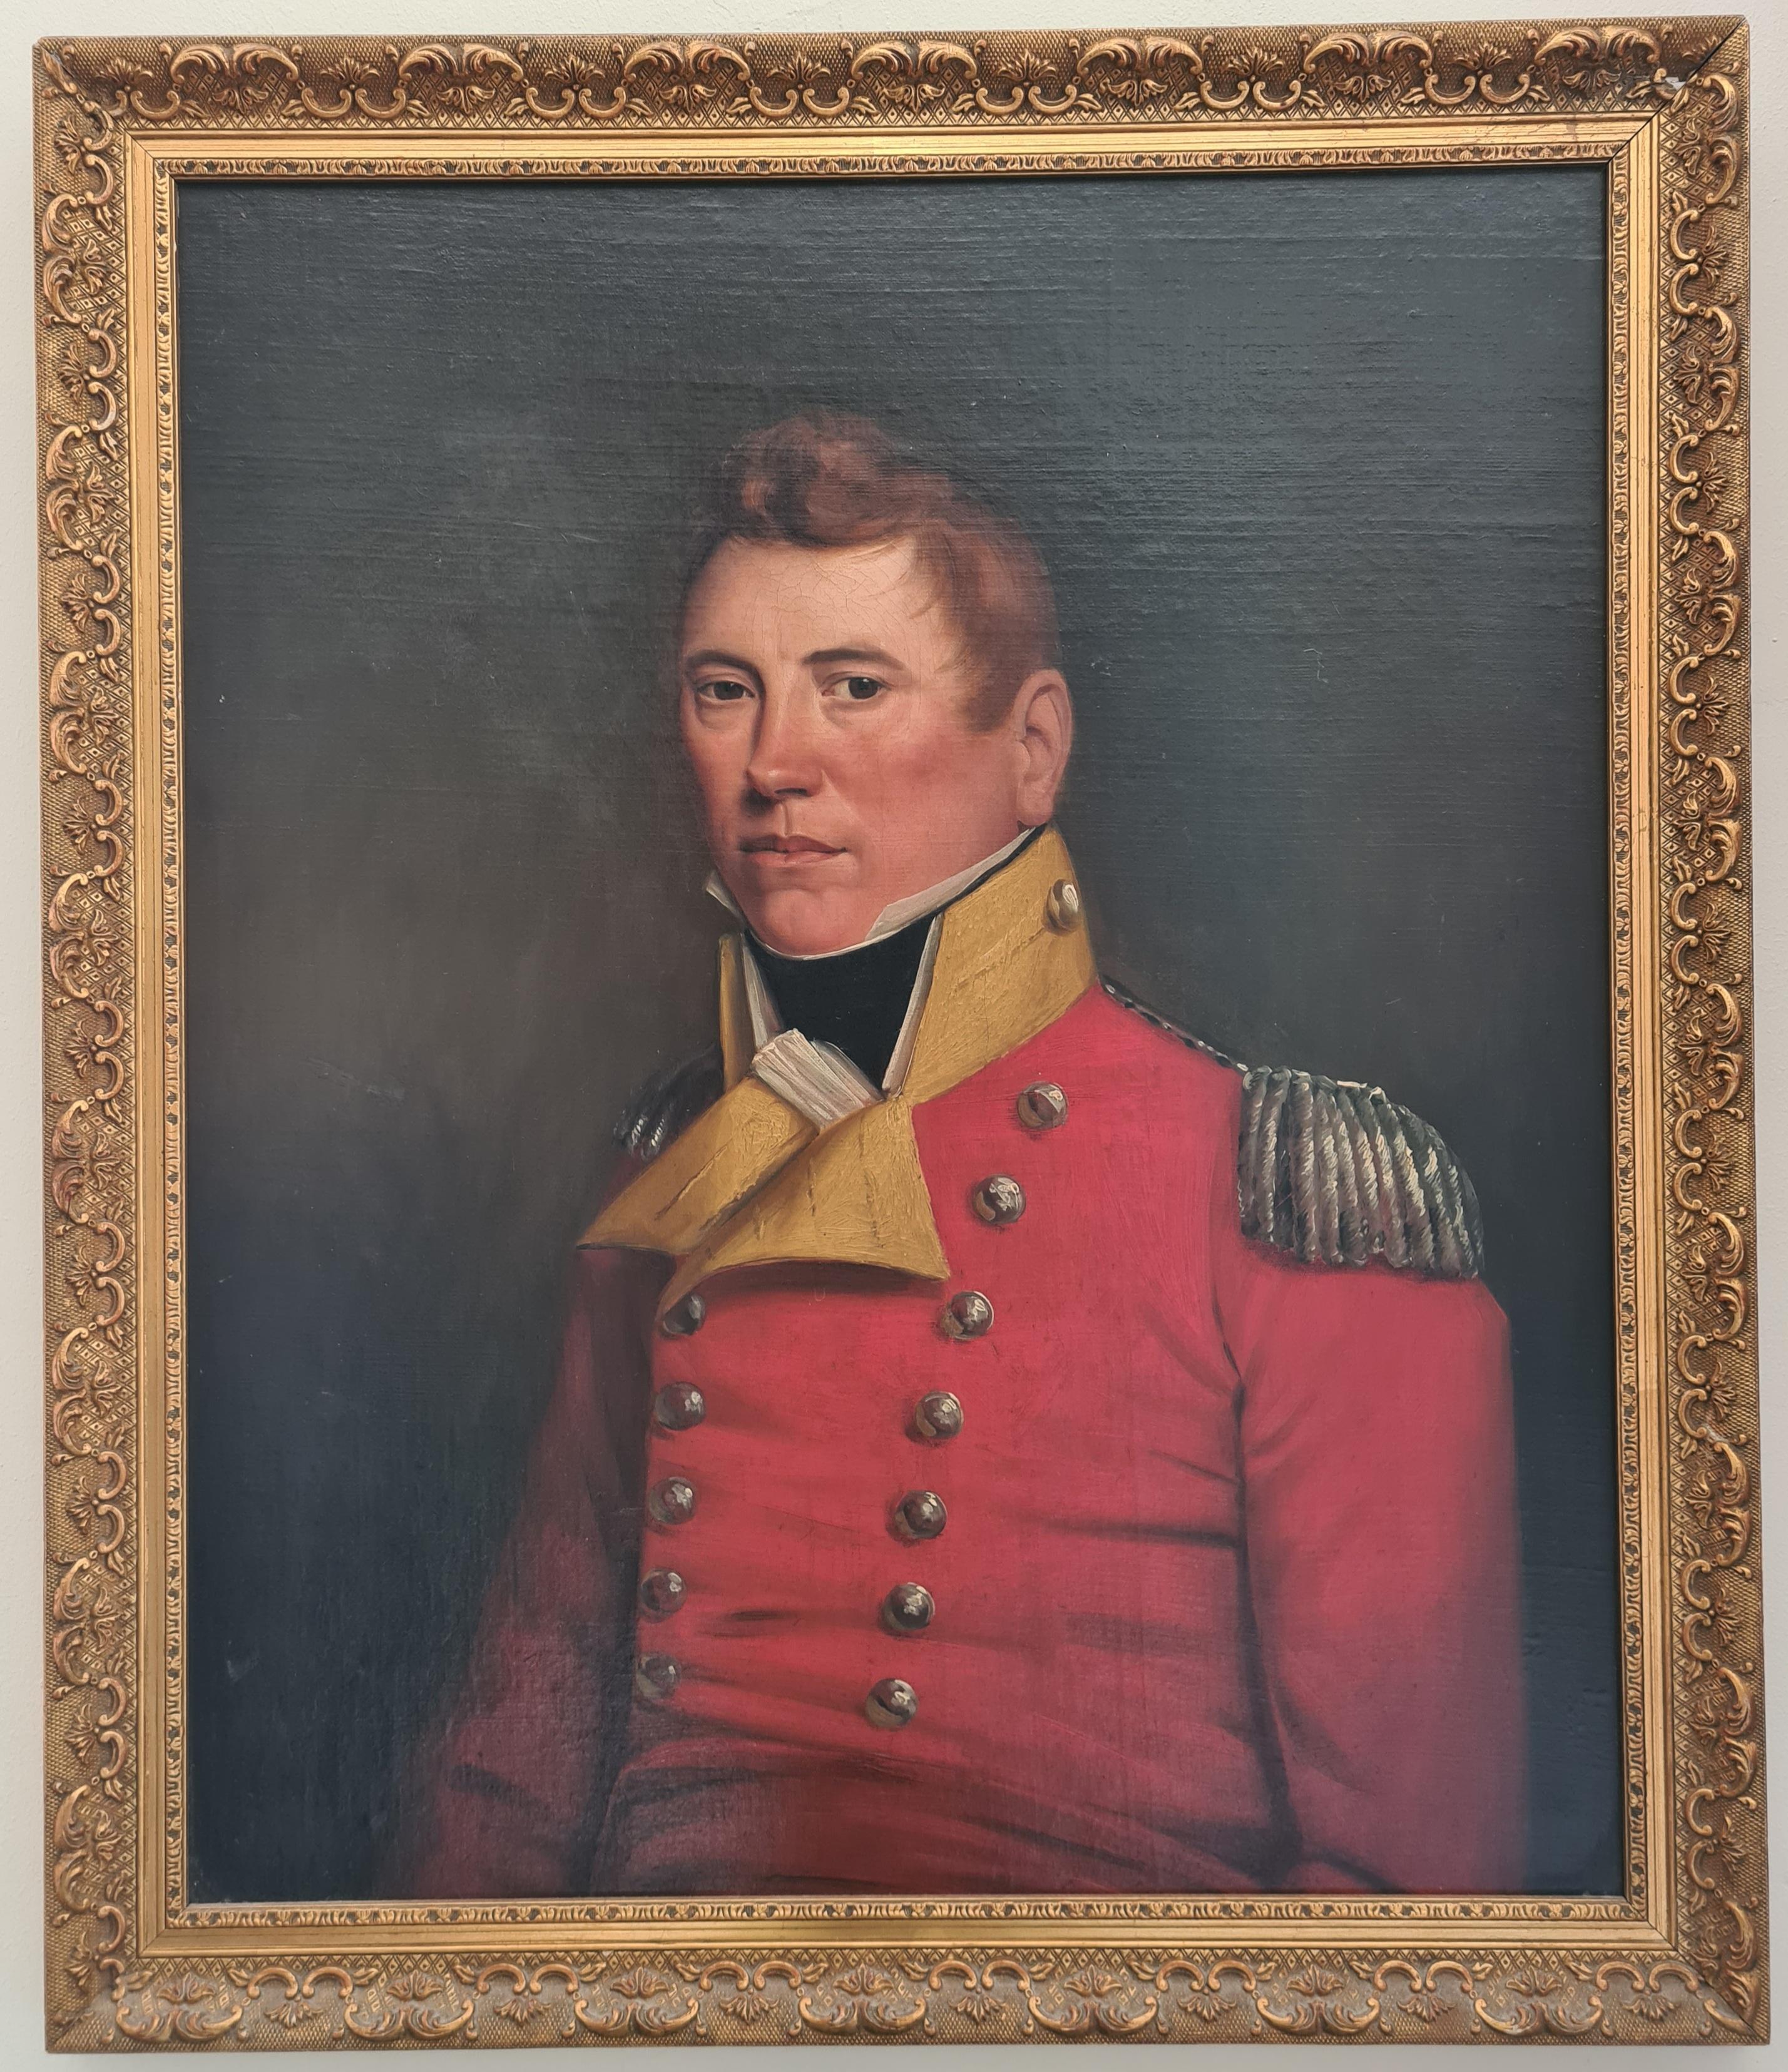 Sir David Wilkie Figurative Painting – Porträt aus dem 18. Jahrhundert, Major Alexander Brown in Militäruniform